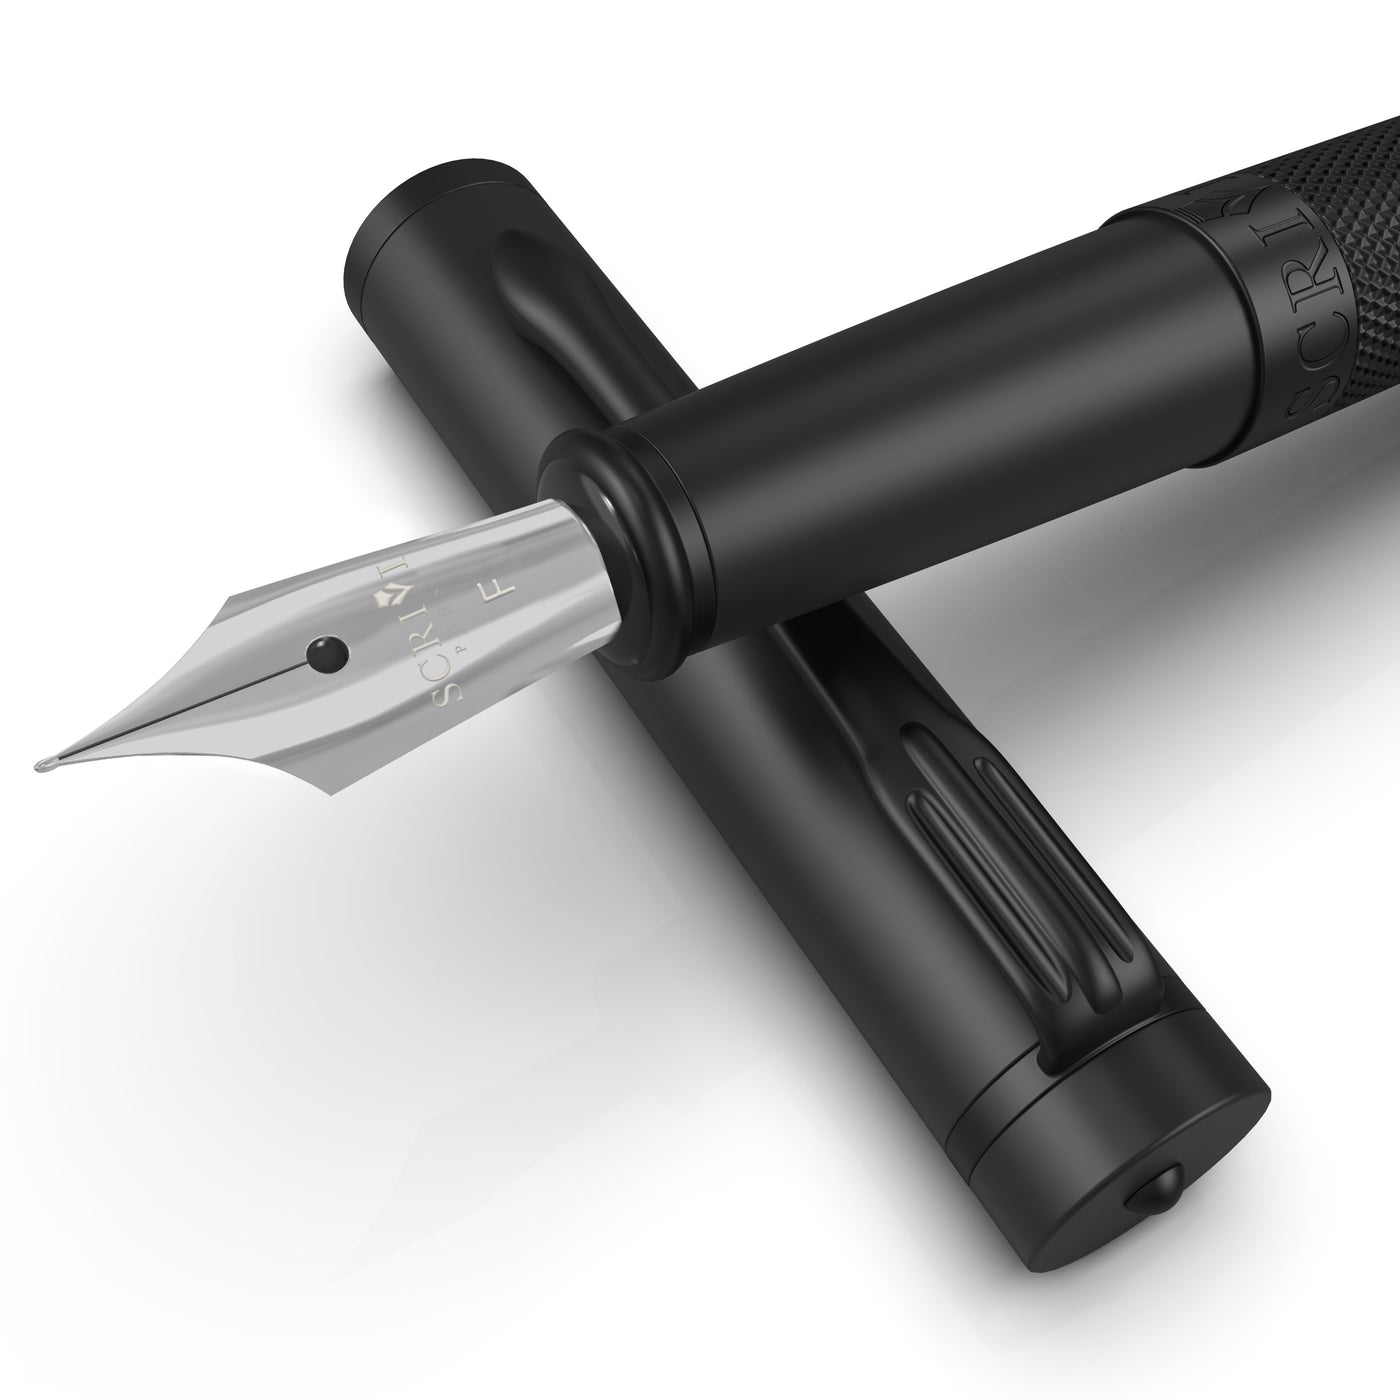 Fine Nib Black Drawing Pen, Set Of 8 Pens